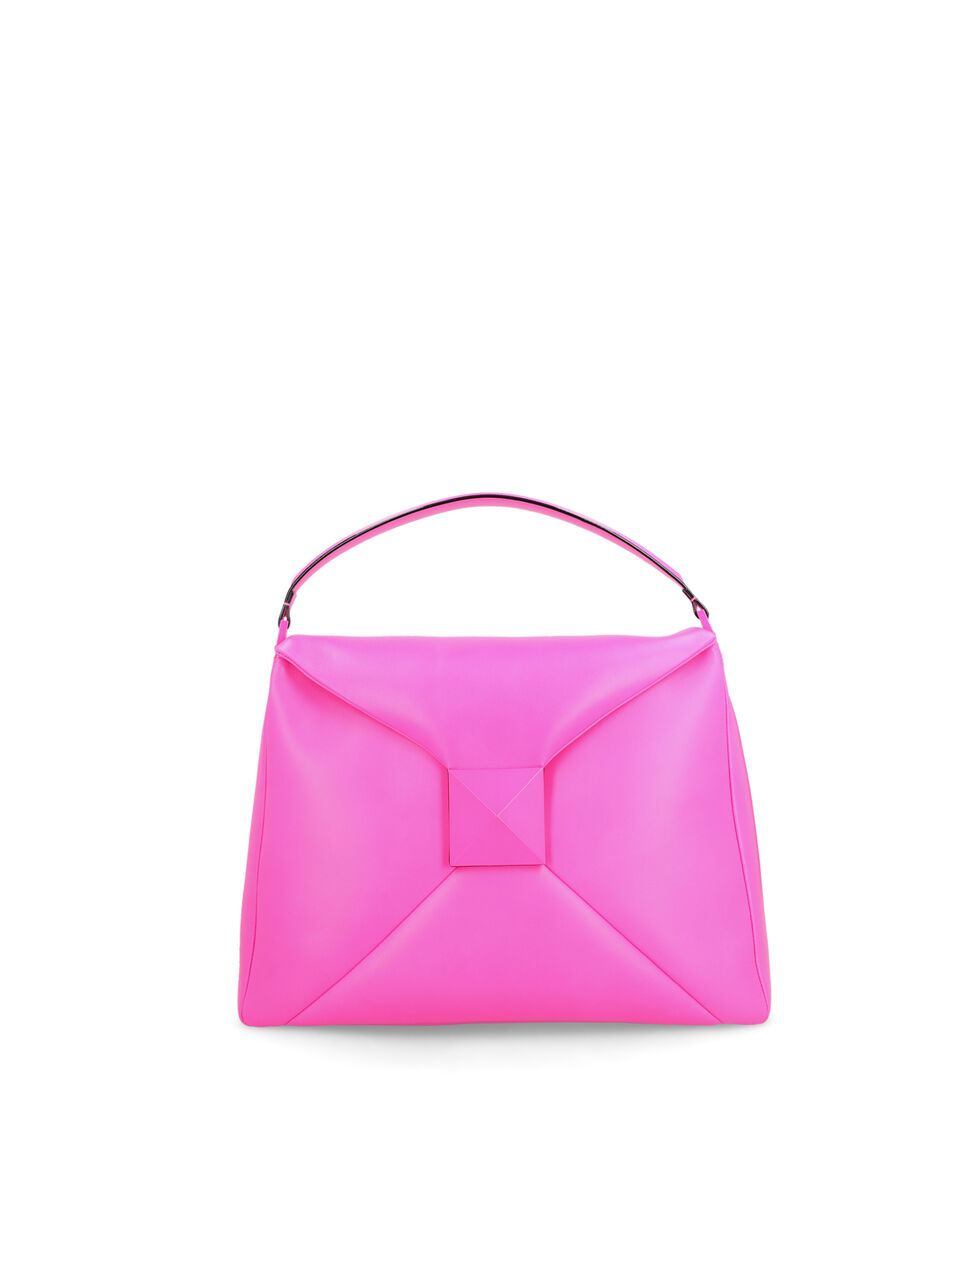 Valentino Garavani One Stud Nappa Leather Maxi Hobo Bag in Pink